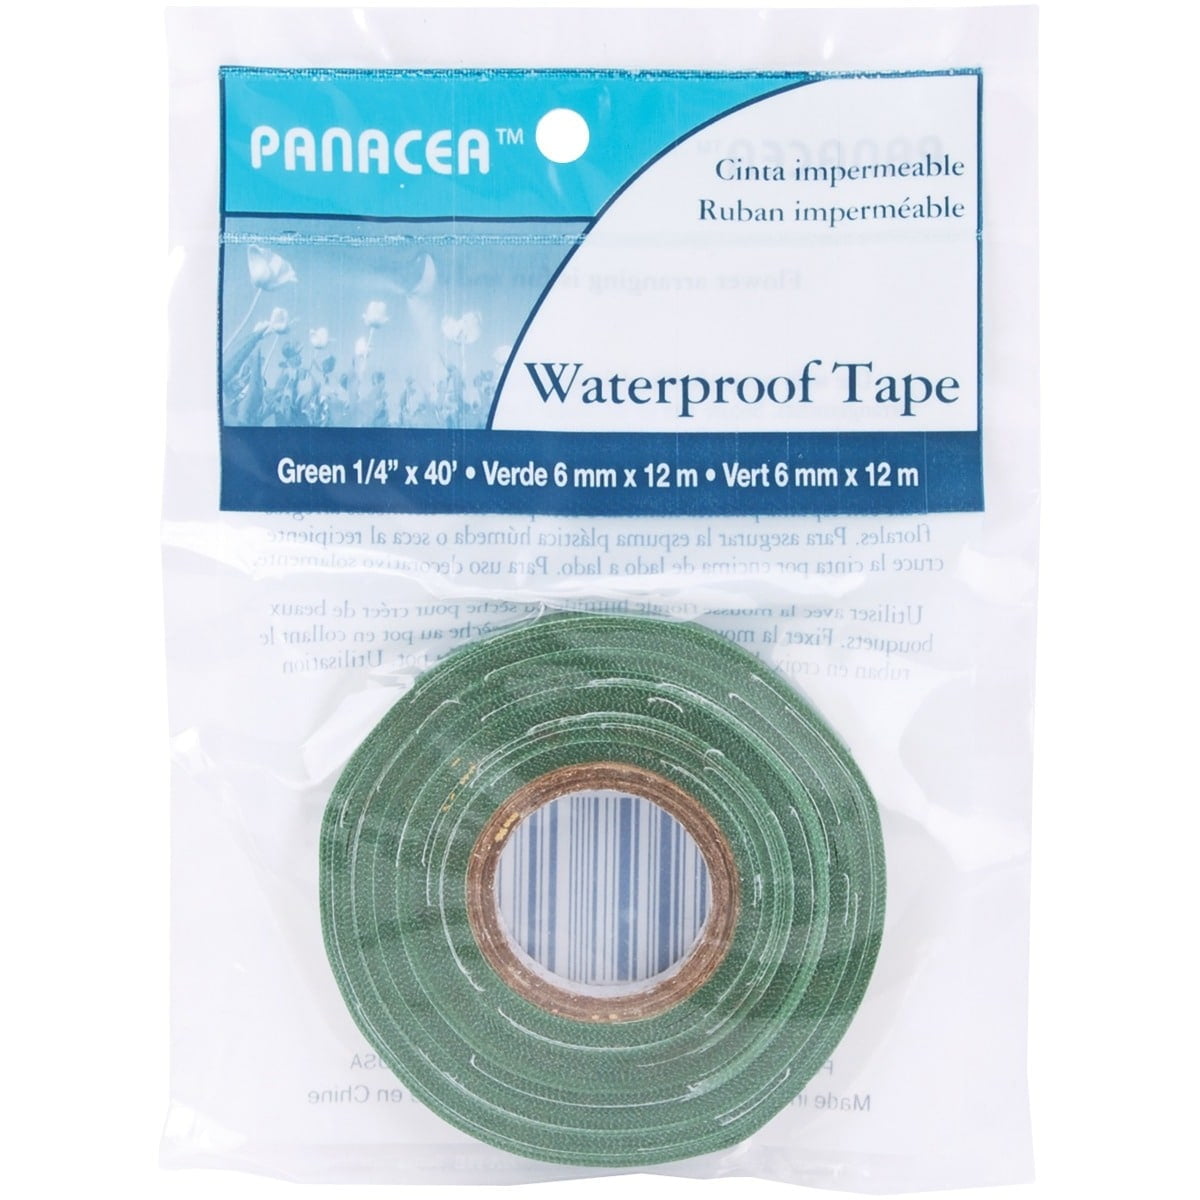 SO-1610-P - OASIS® 1/4 Green Waterproof Tape - one roll